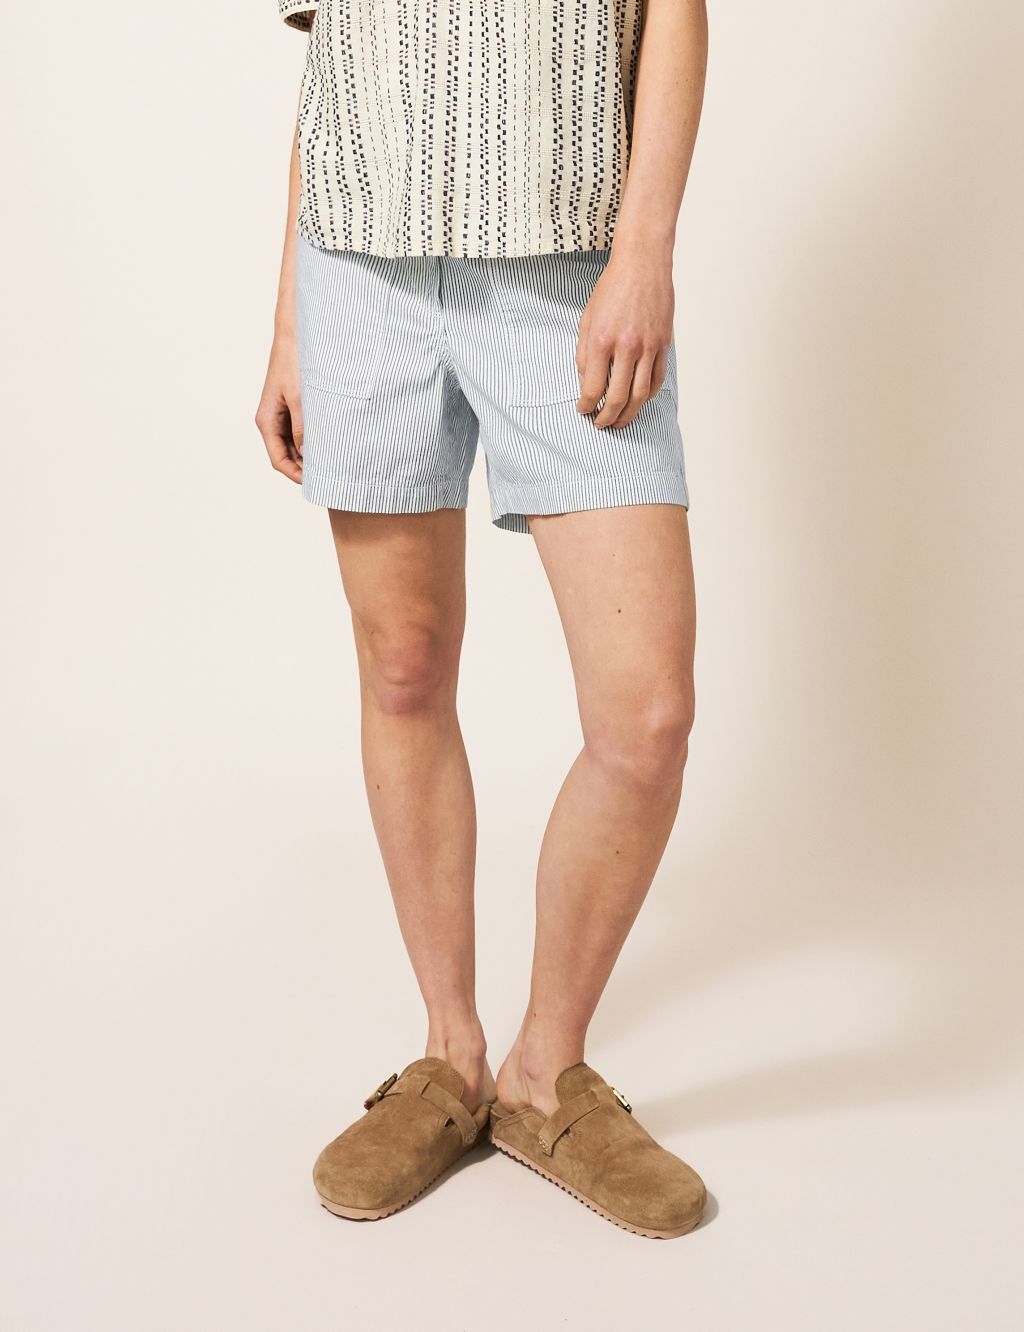 Cotton Rich Striped Chino Shorts image 1